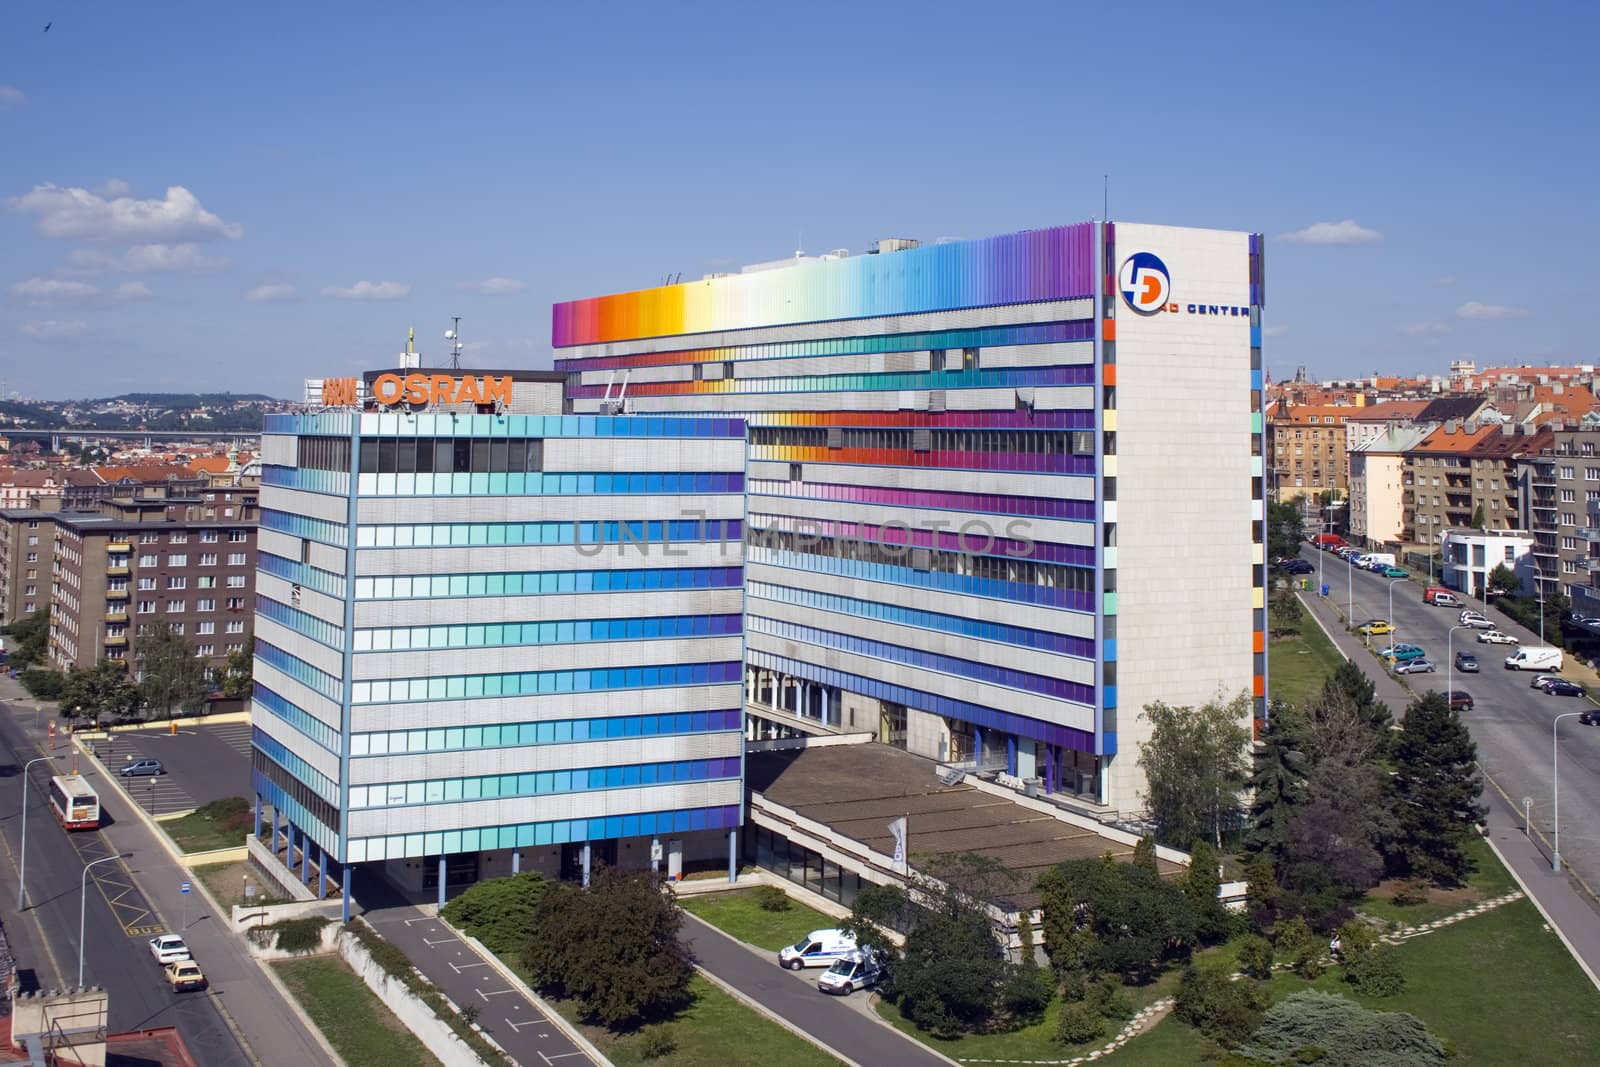 Rainbow Building Kodanska by werg